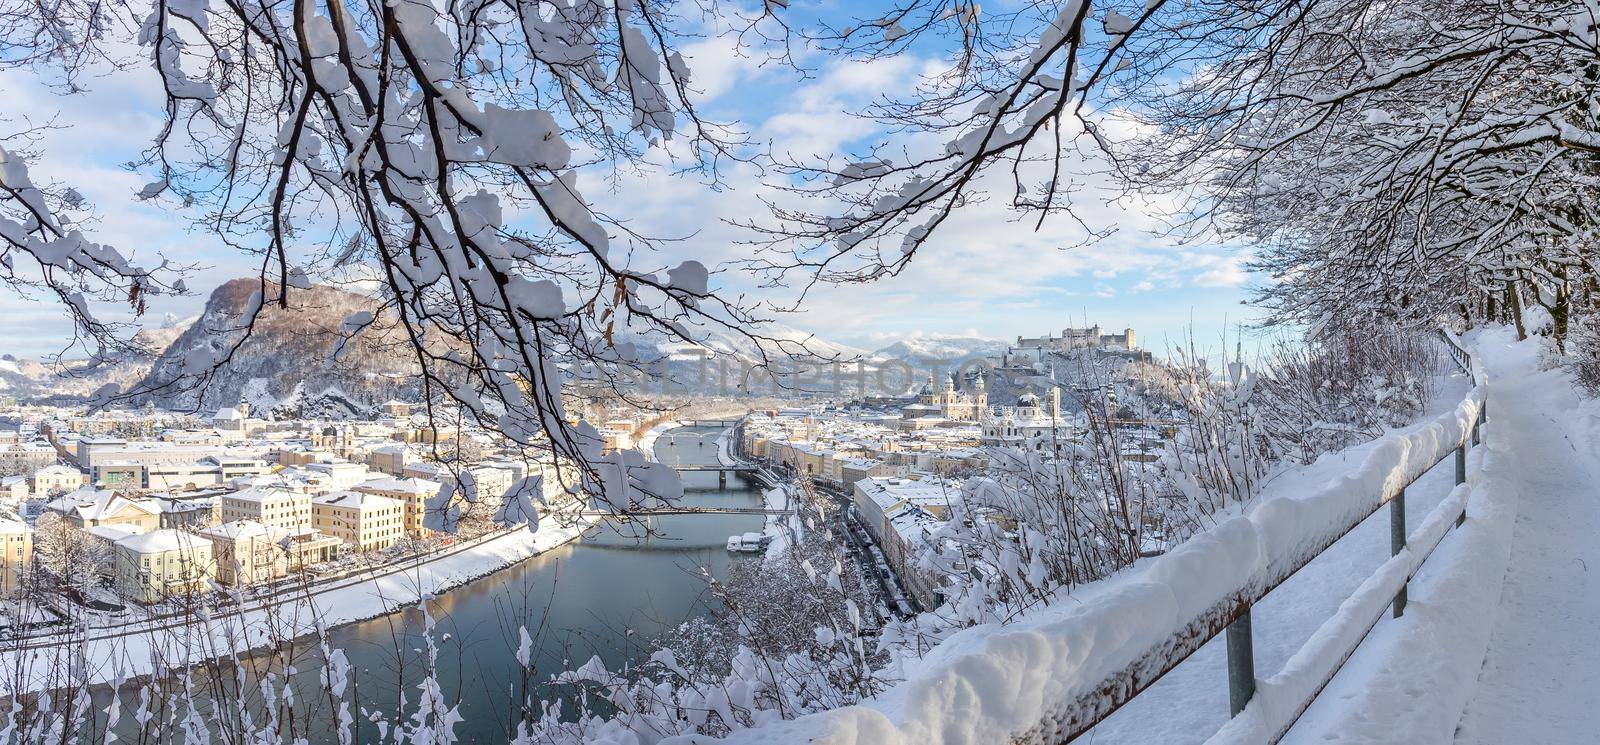 Panorama of Salzburg in winter: Snowy historical center, sunshine by Daxenbichler